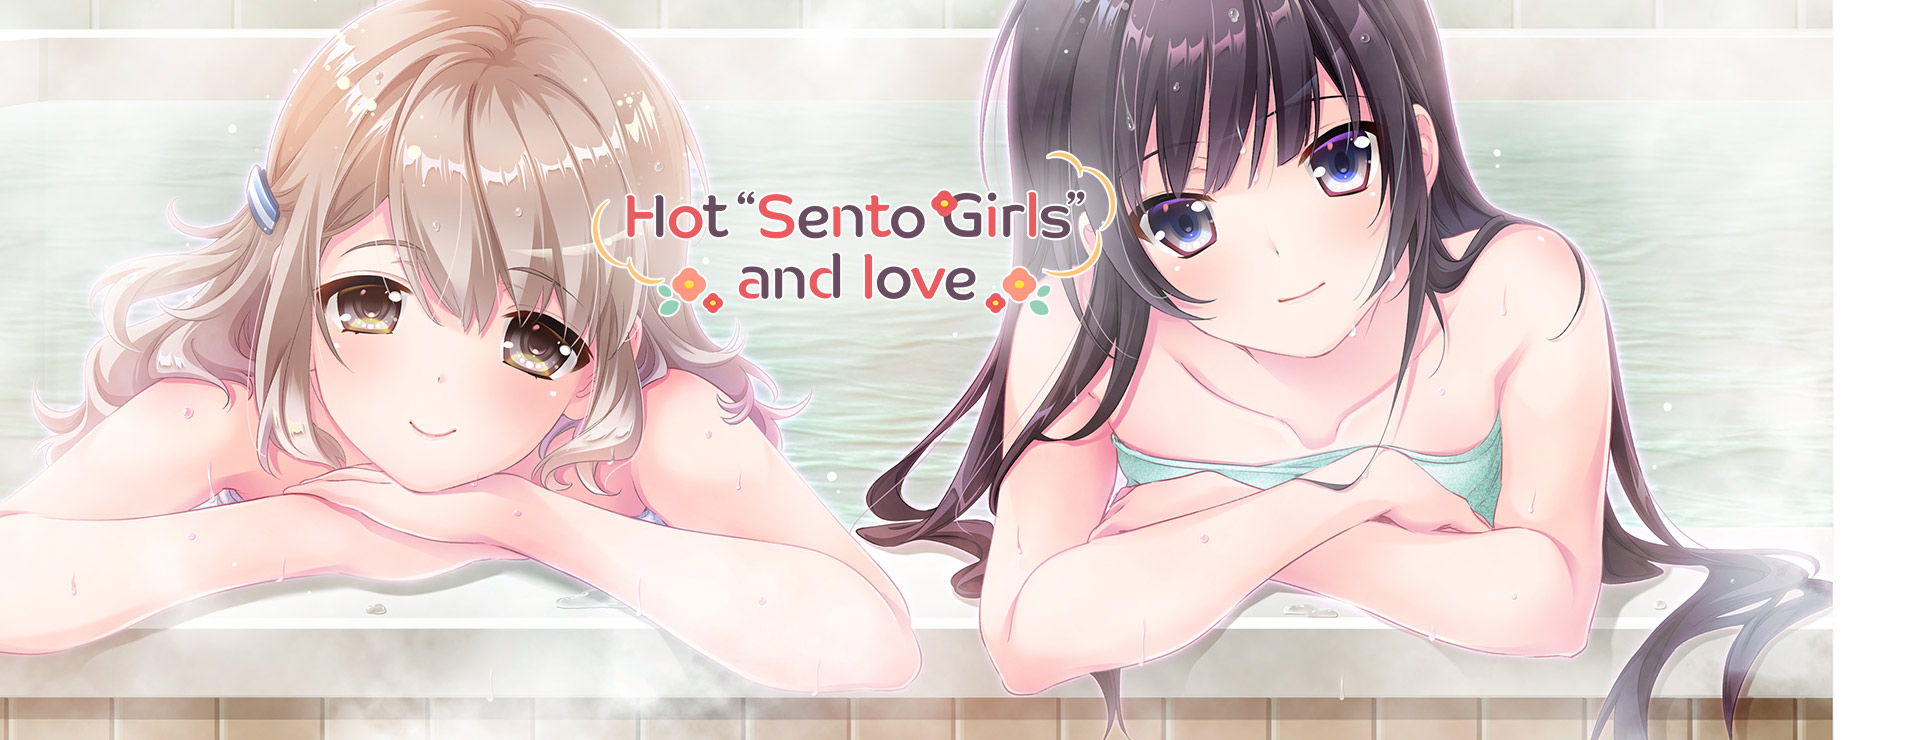 Hot "Sento Girls" and Love - 虚拟小说 遊戲